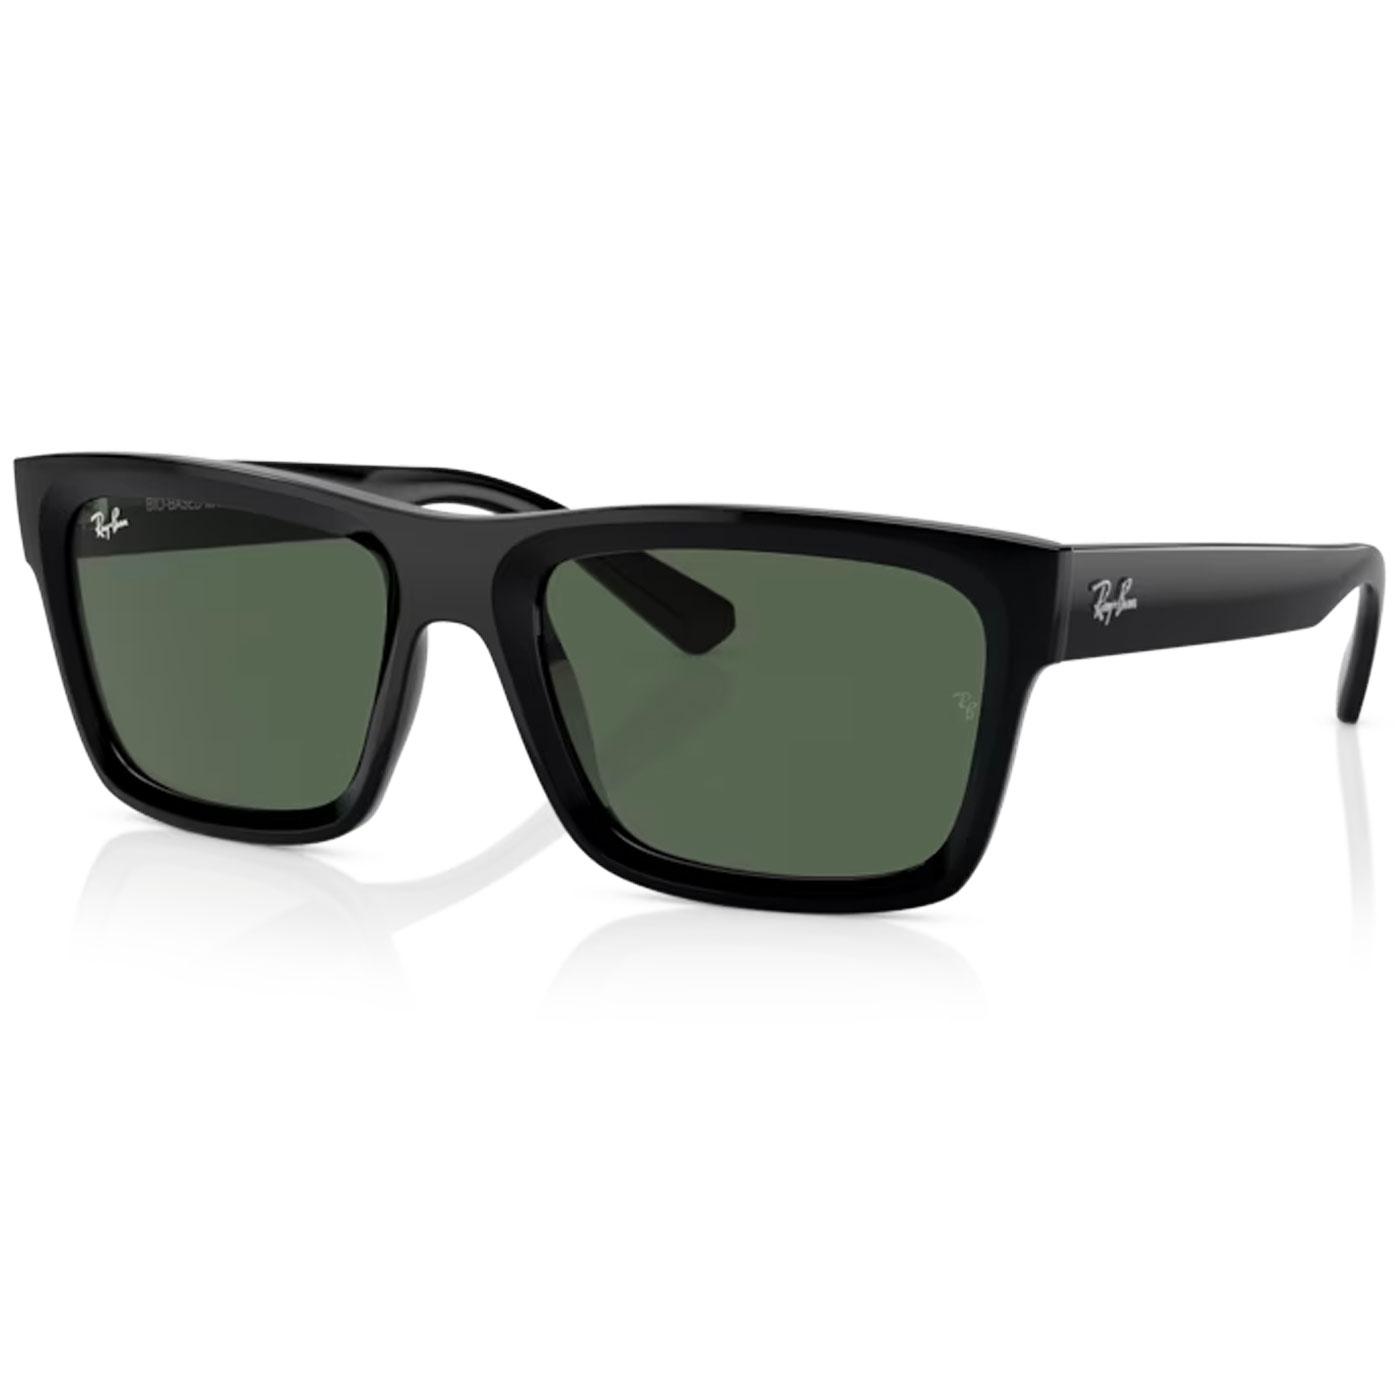 Warren RAY-BAN Bio-Based Retro 50s Sunglasses B